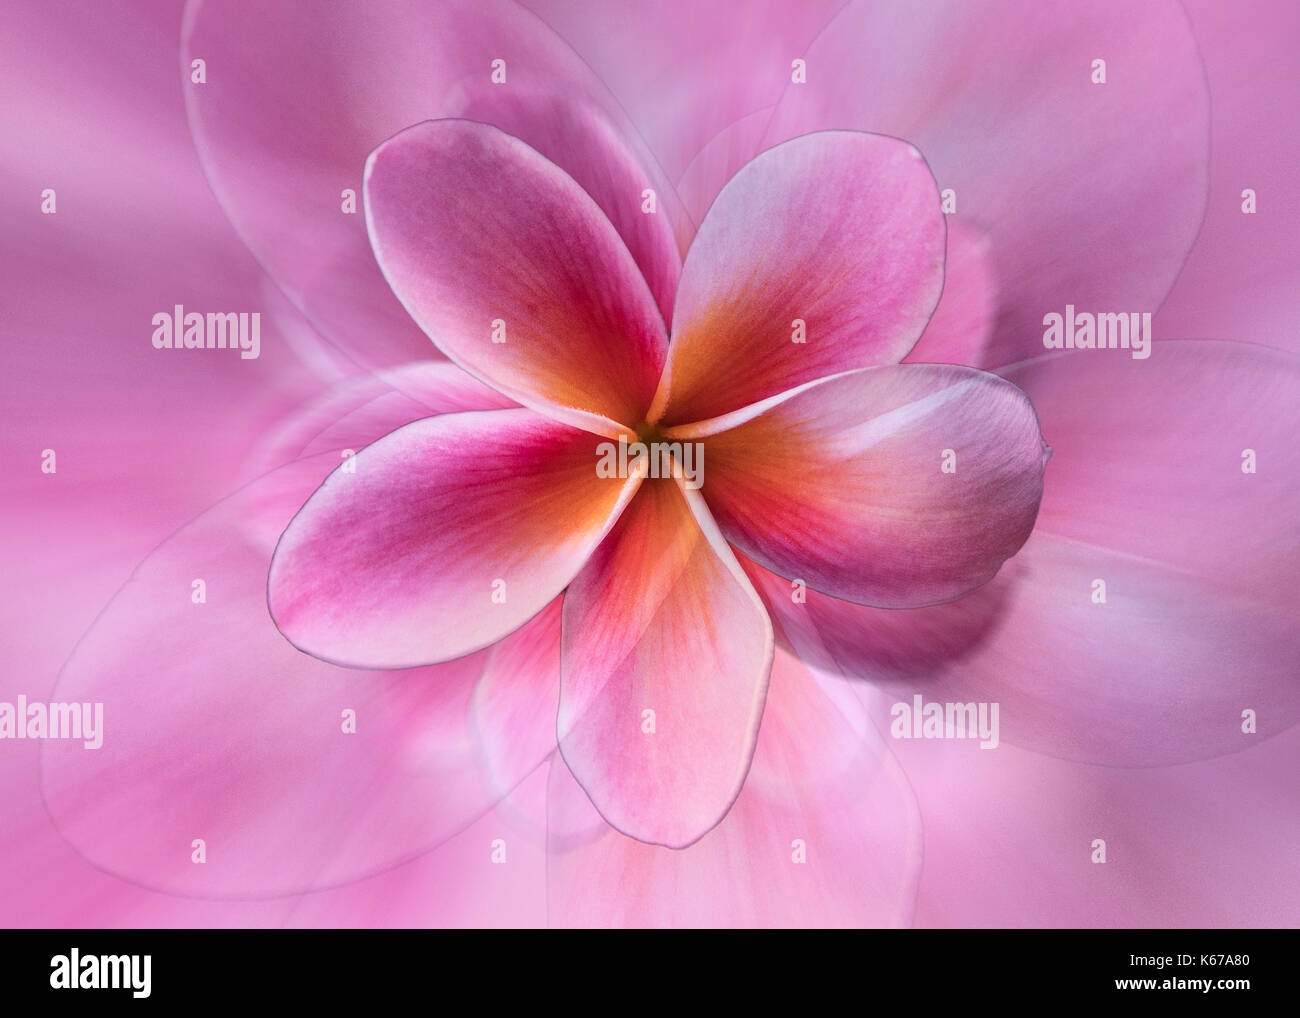 Abstract frangipani flower montage Stock Photo